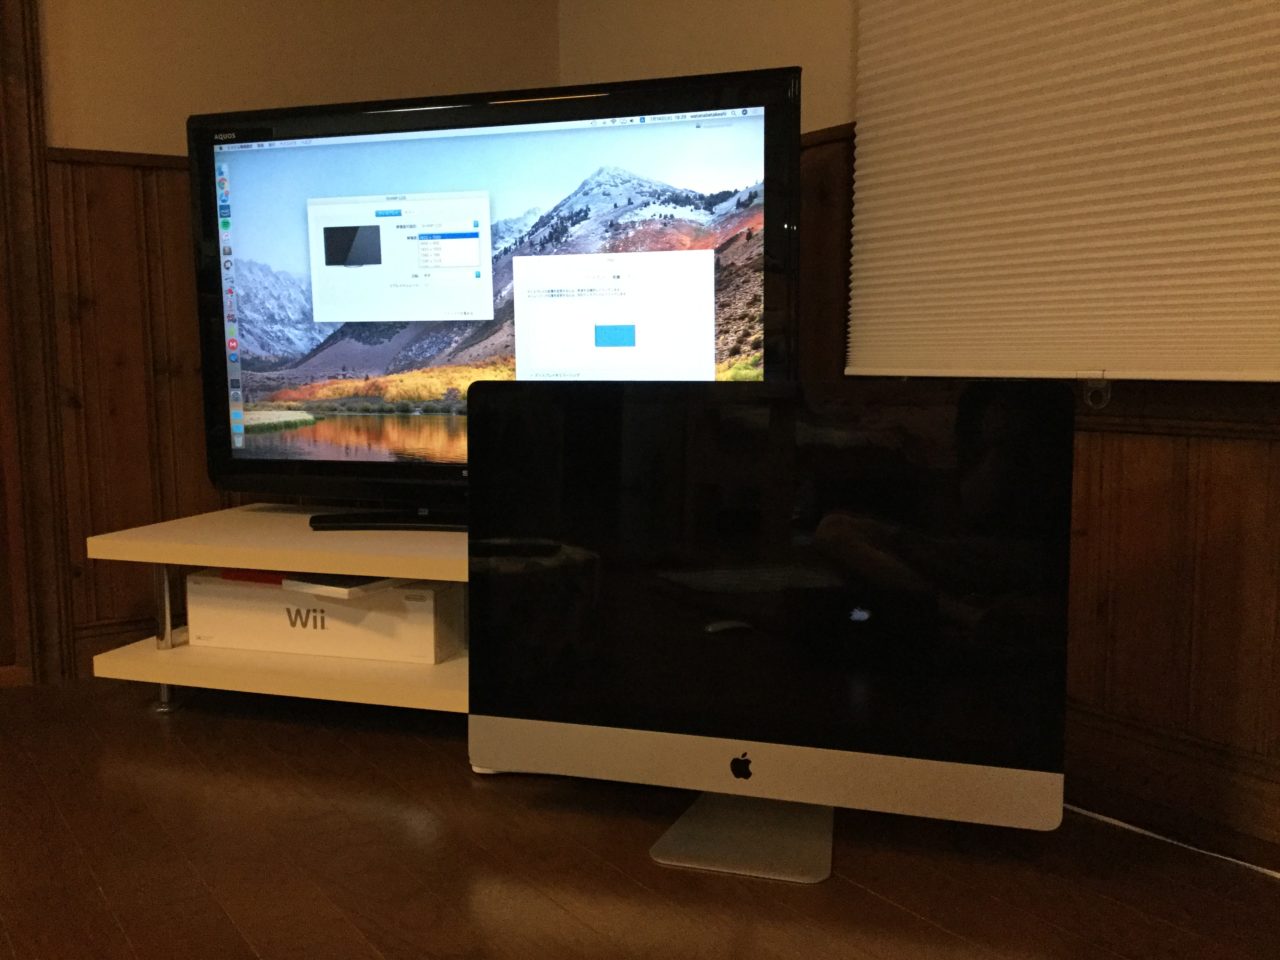 iMac（27-inch, Late 2009）の画面が頻繁に消えるのでインバータ交換するも改善なし